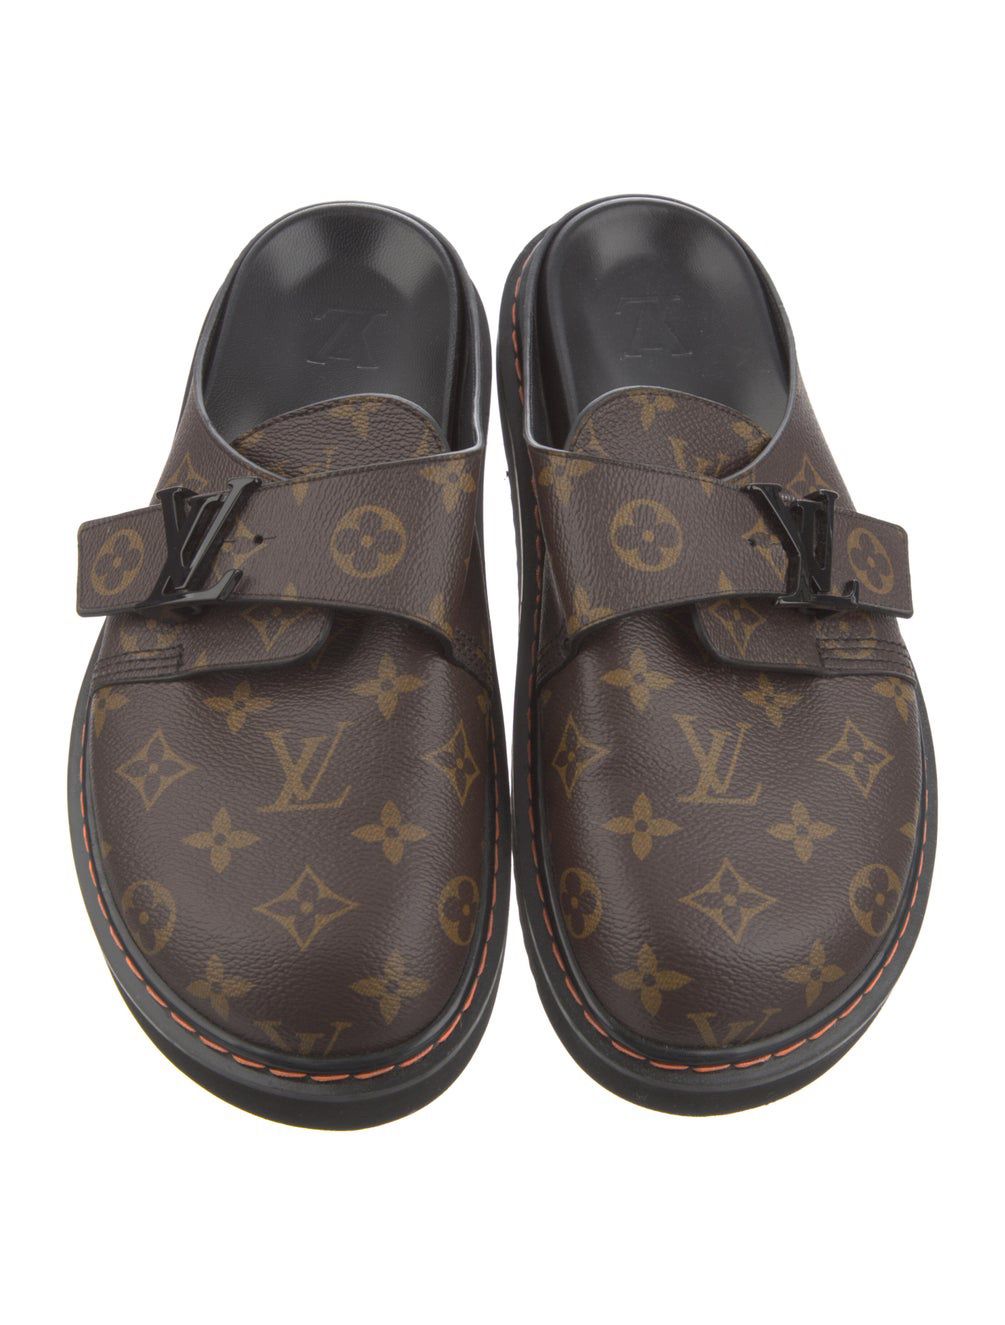 Bom Dia Flat Mule Louis Vuitton Sandals for Sale in Atlanta, GA - OfferUp